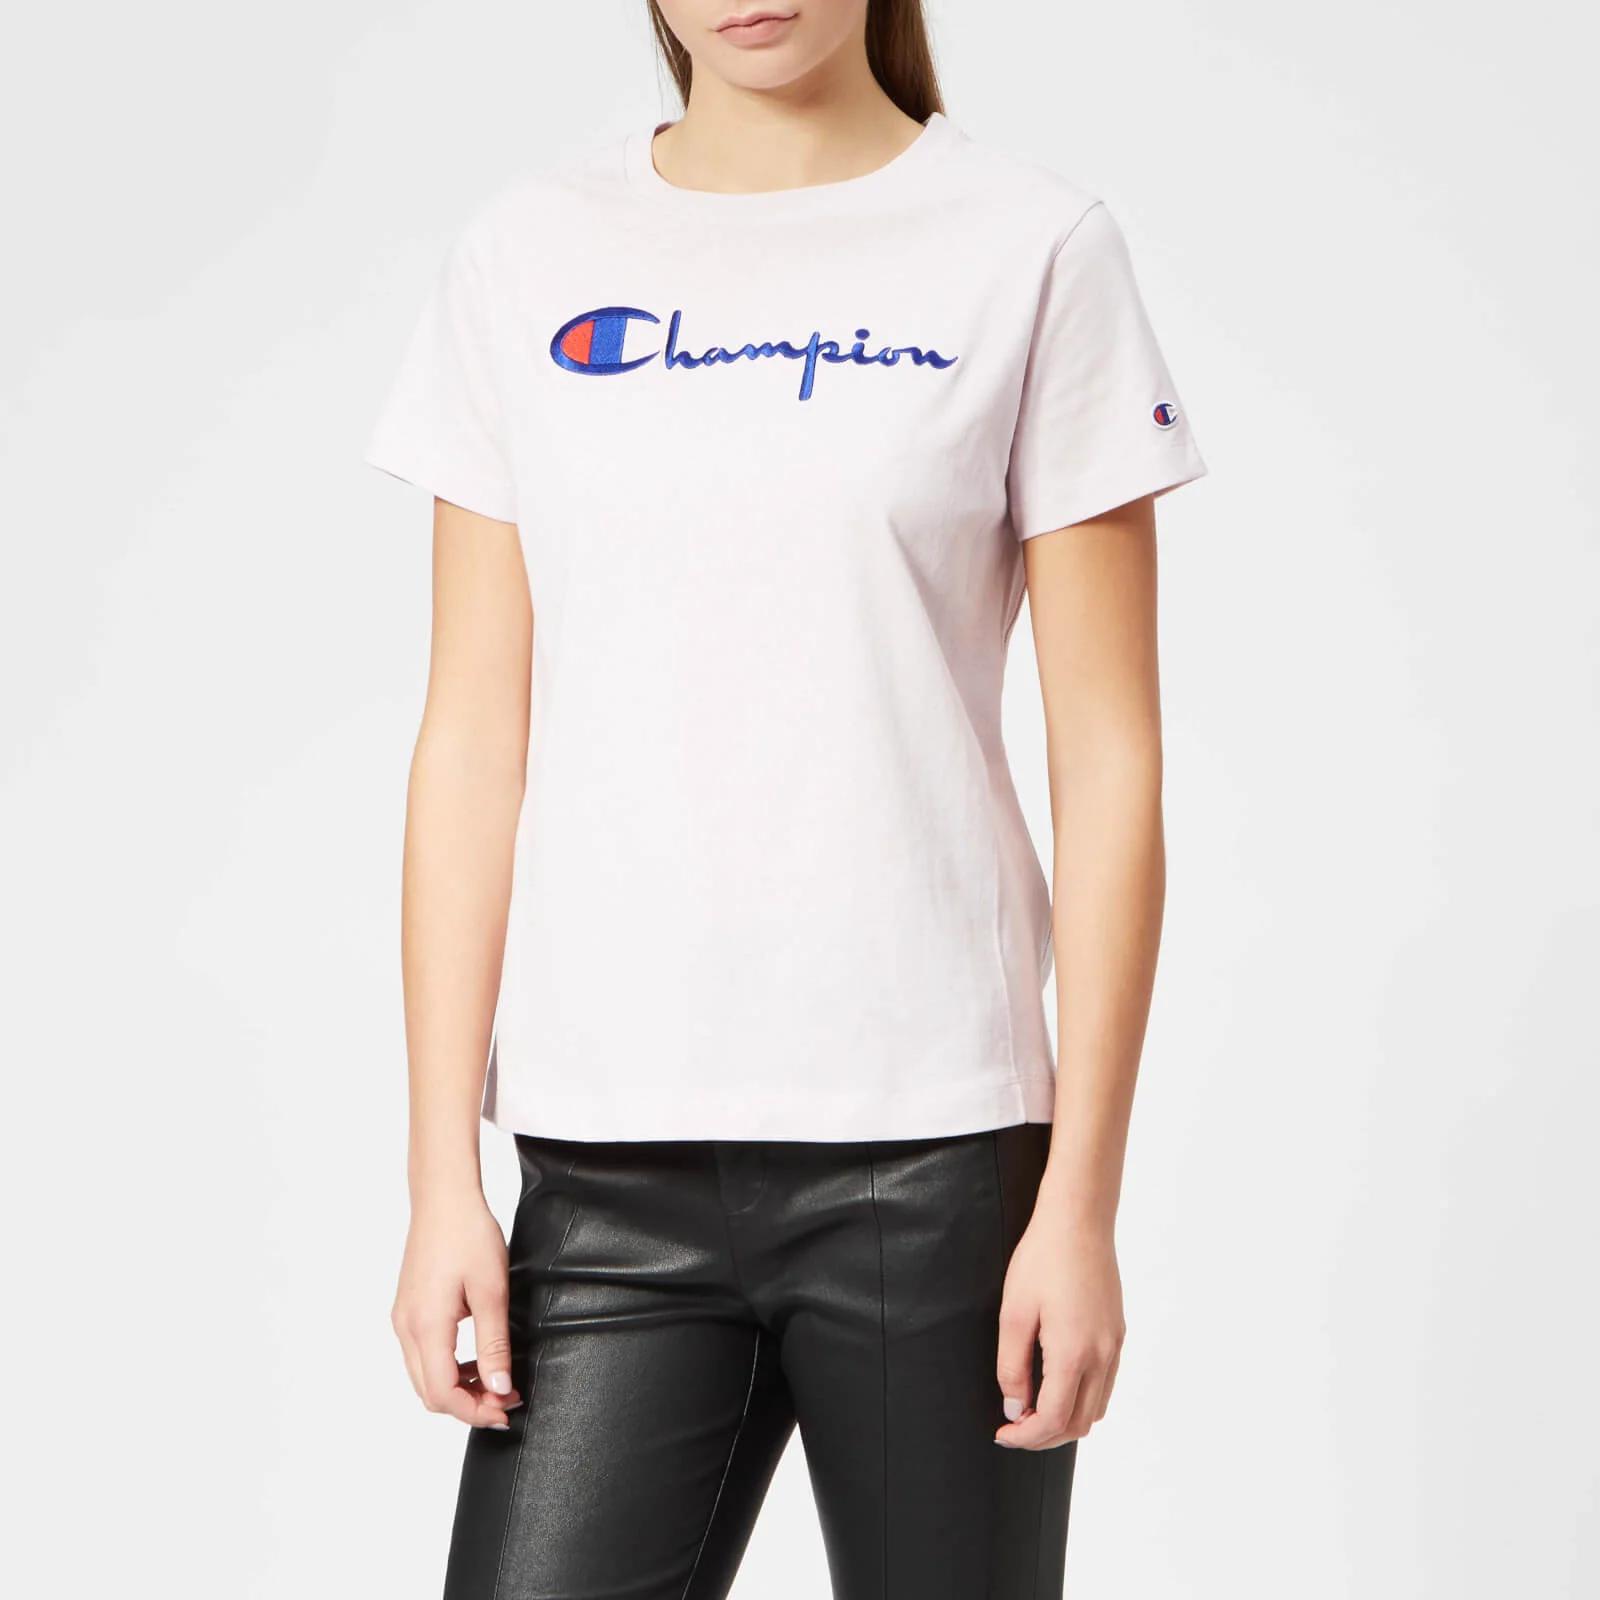 Champion Women's Crew Neck T-Shirt - Lilac Image 1